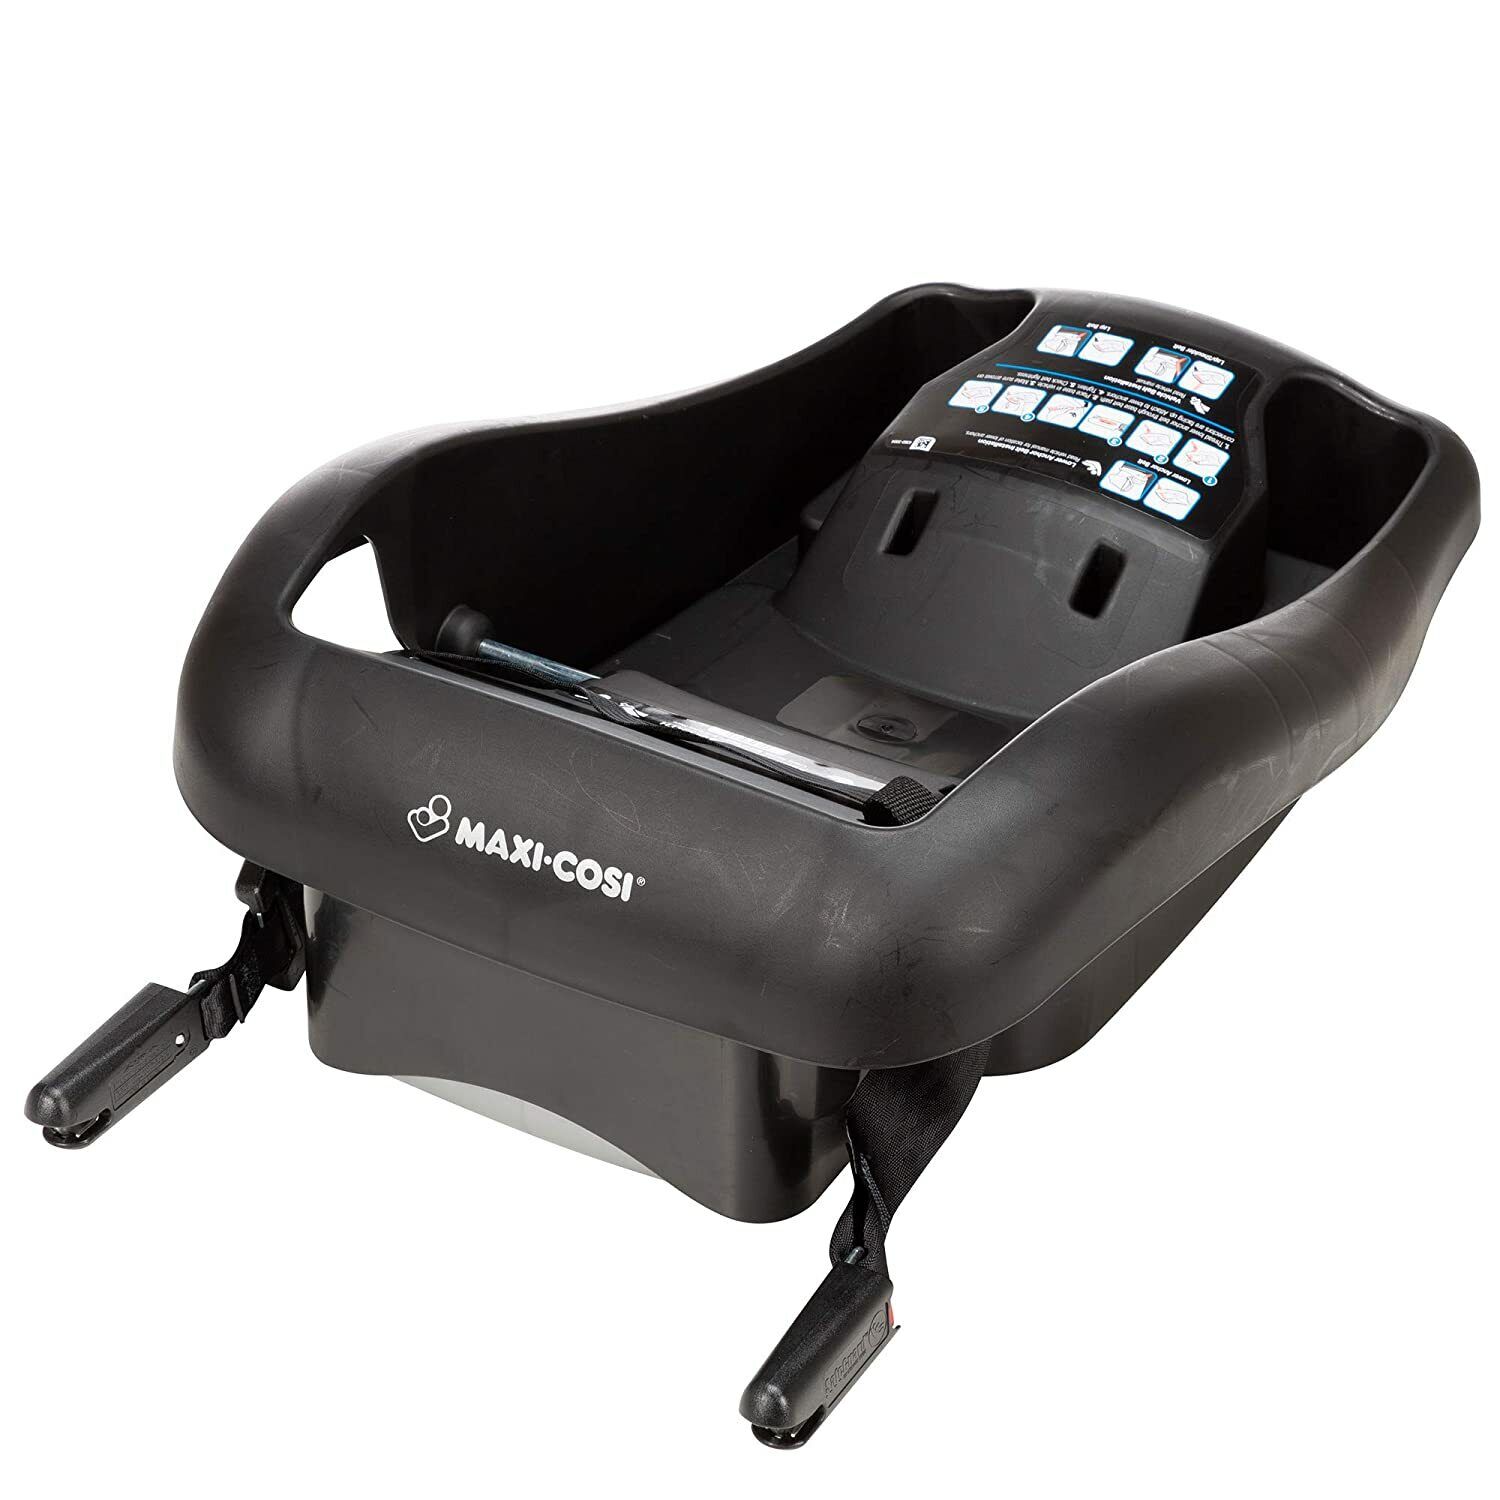 Maxi Cosi Mico 30 Infant Car Seat Base Ic290blkb Open Box Brand New